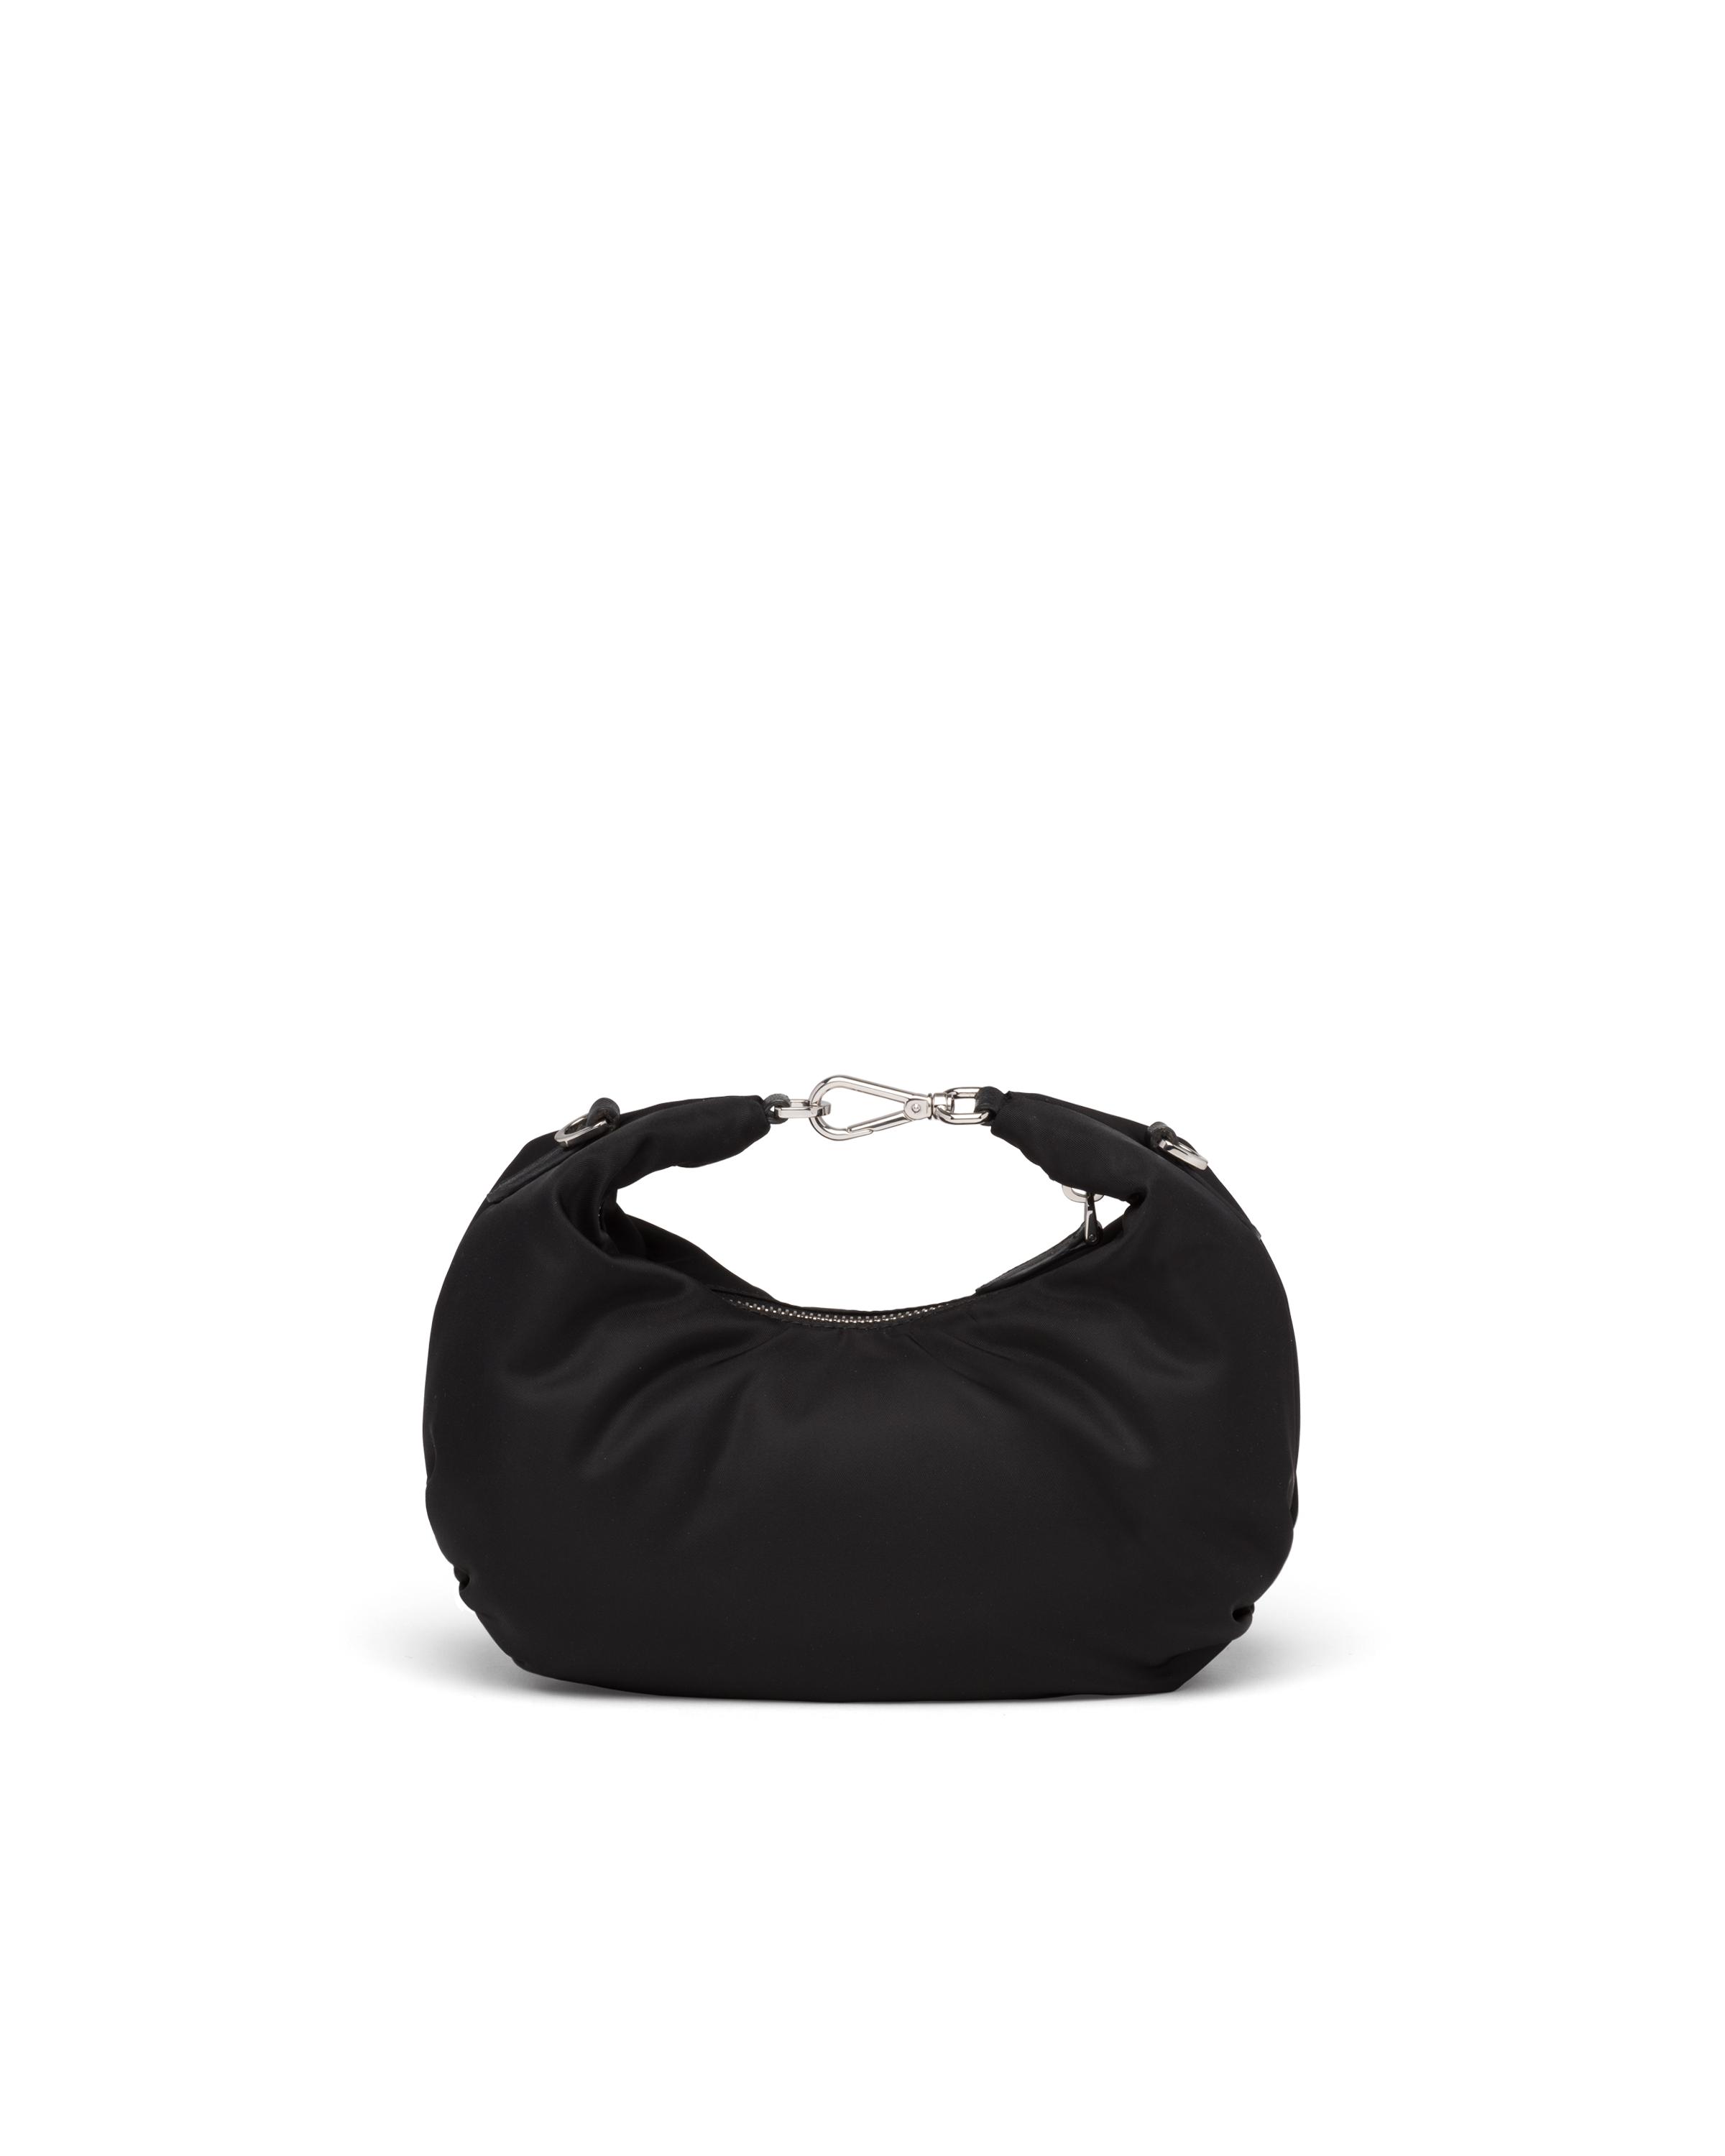 Prada Re-edition 2006 Nylon Bag in Black | Lyst